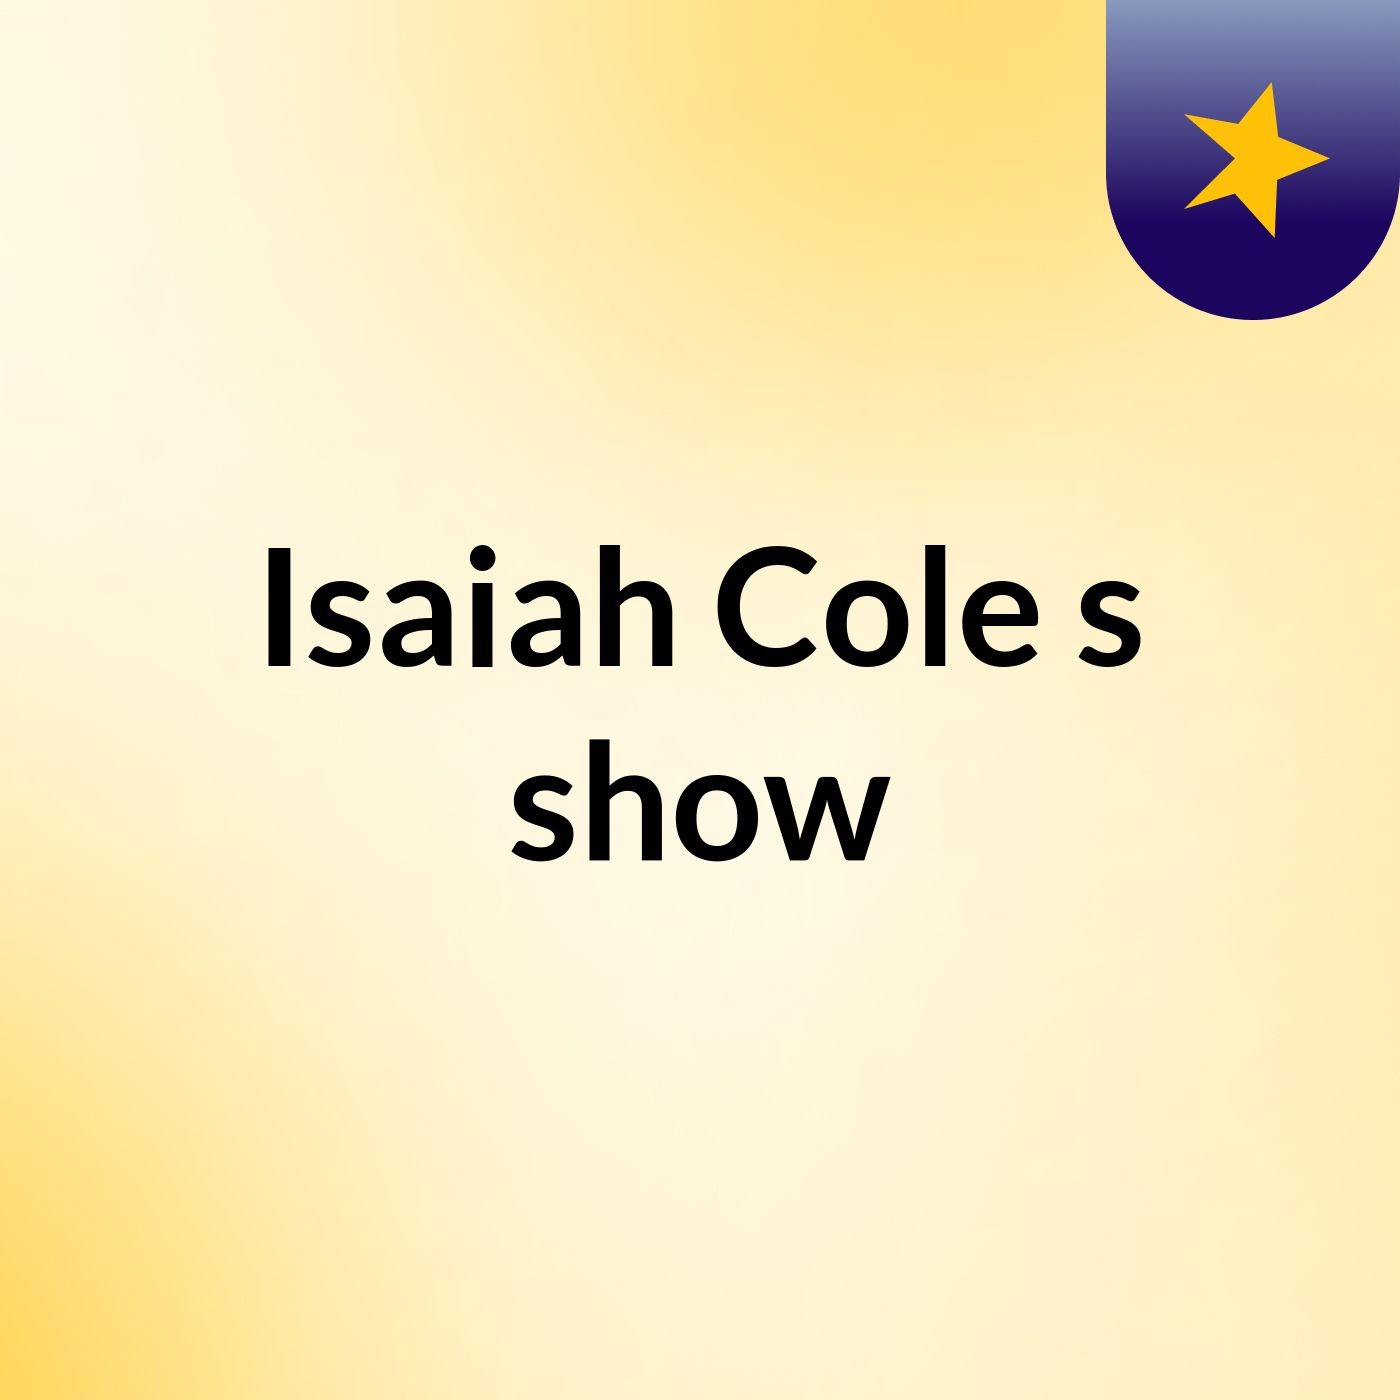 Isaiah Cole's show